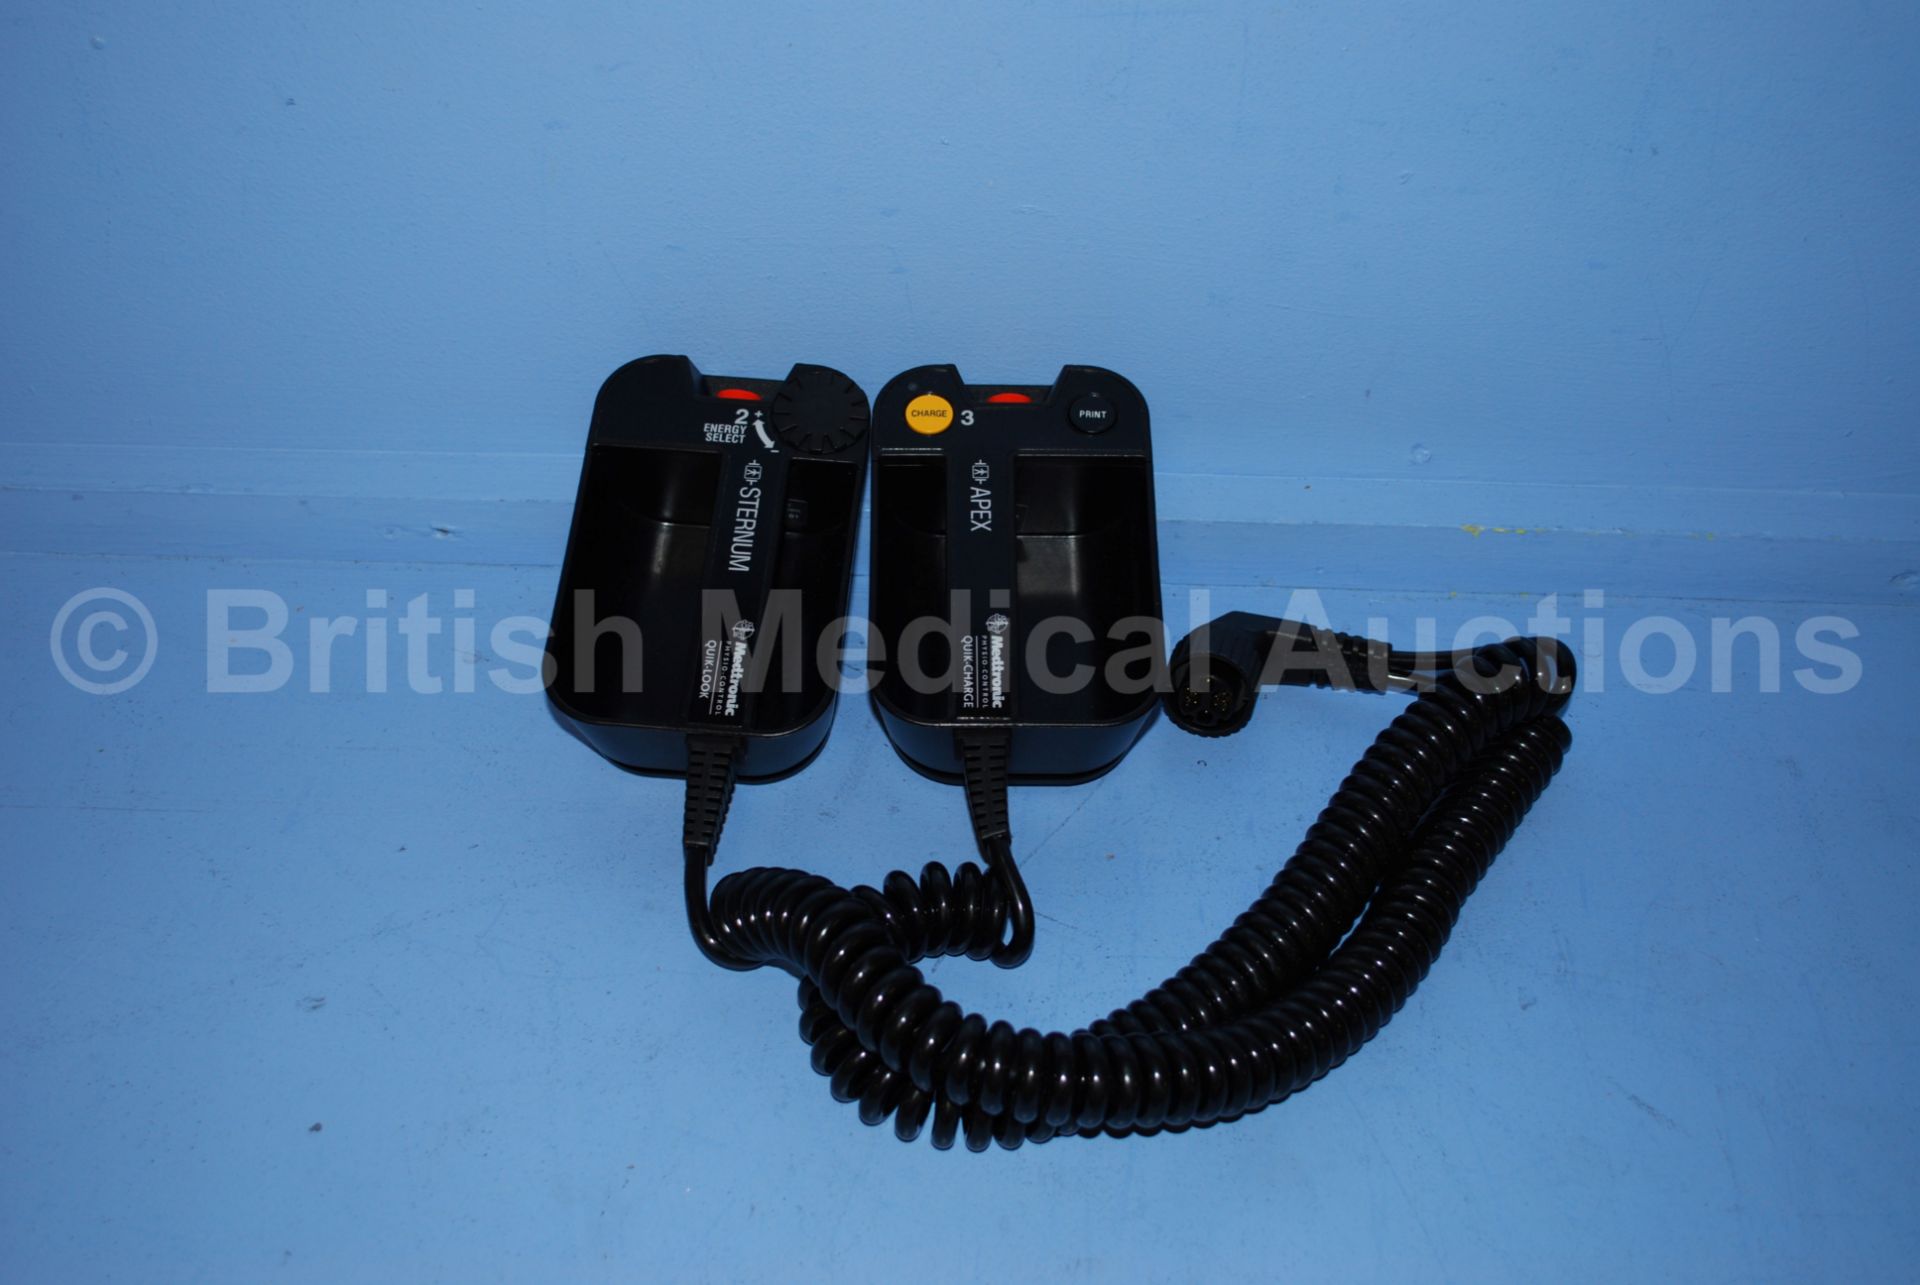 Medtronic Physio-Control Defibrillator Hard Paddle